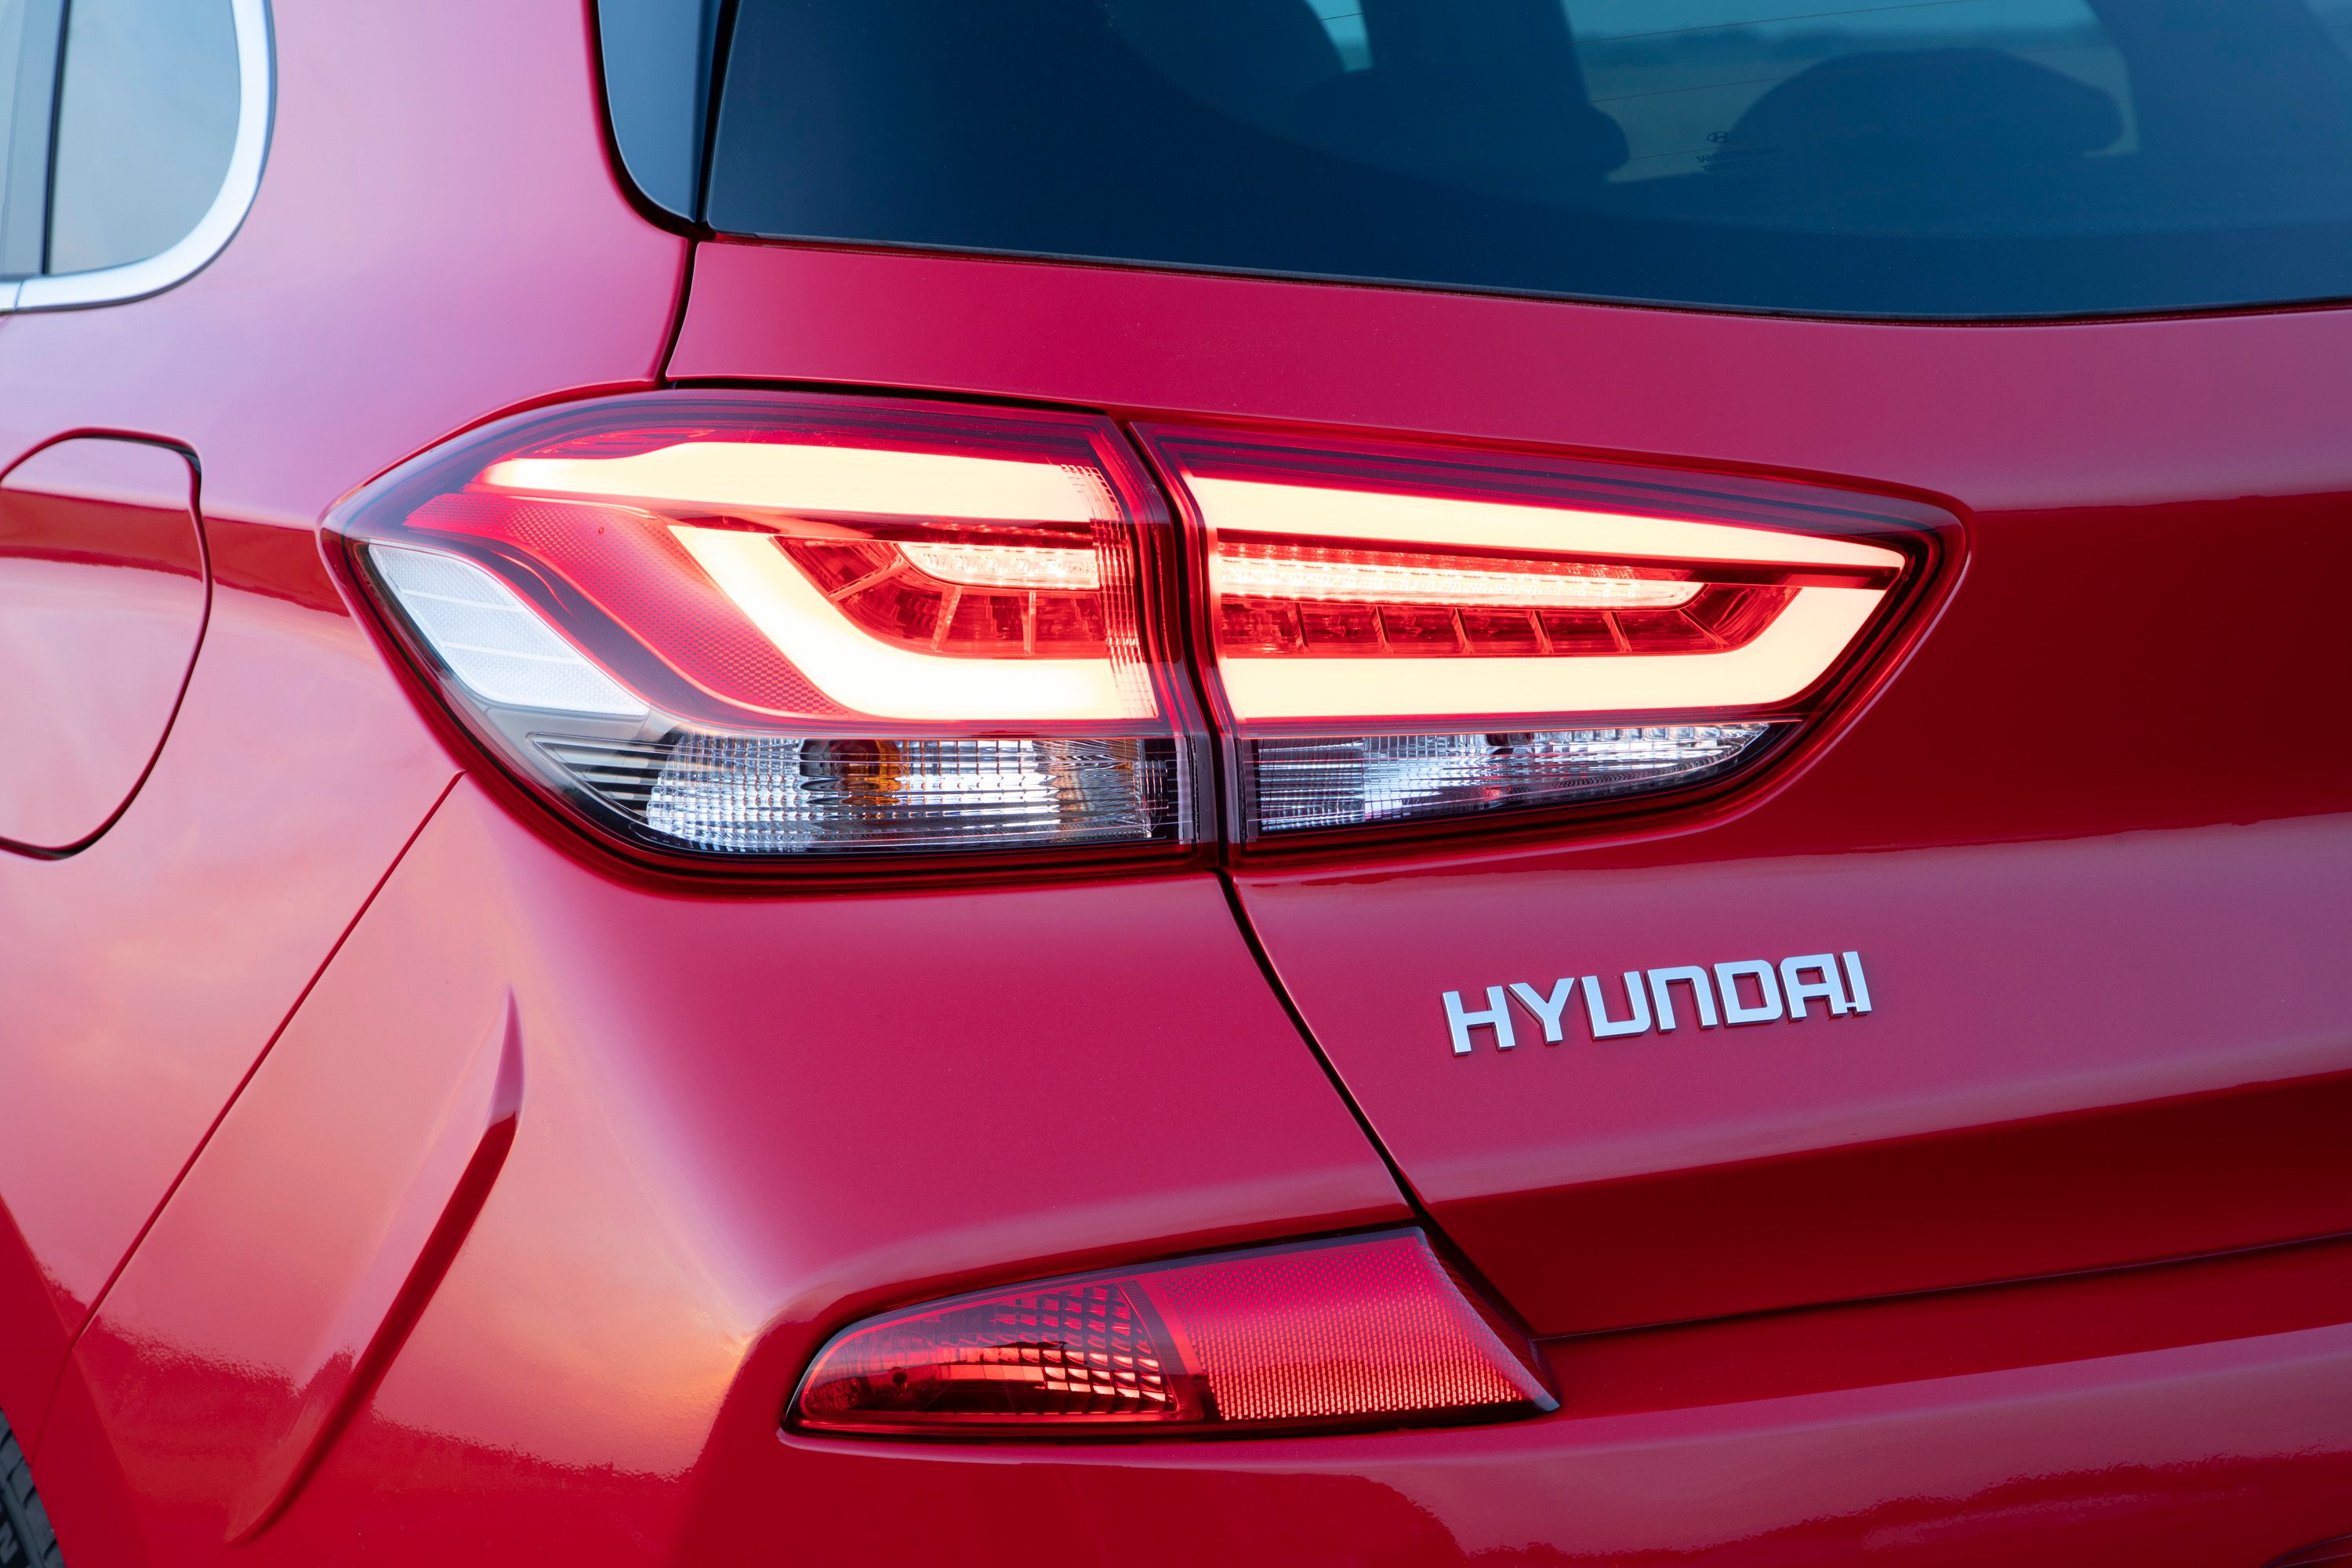 2018 - 2018 The Hyundai i30 N Line Isn’t A Hot-Hatch, Yet It Looks Stimulating Like One